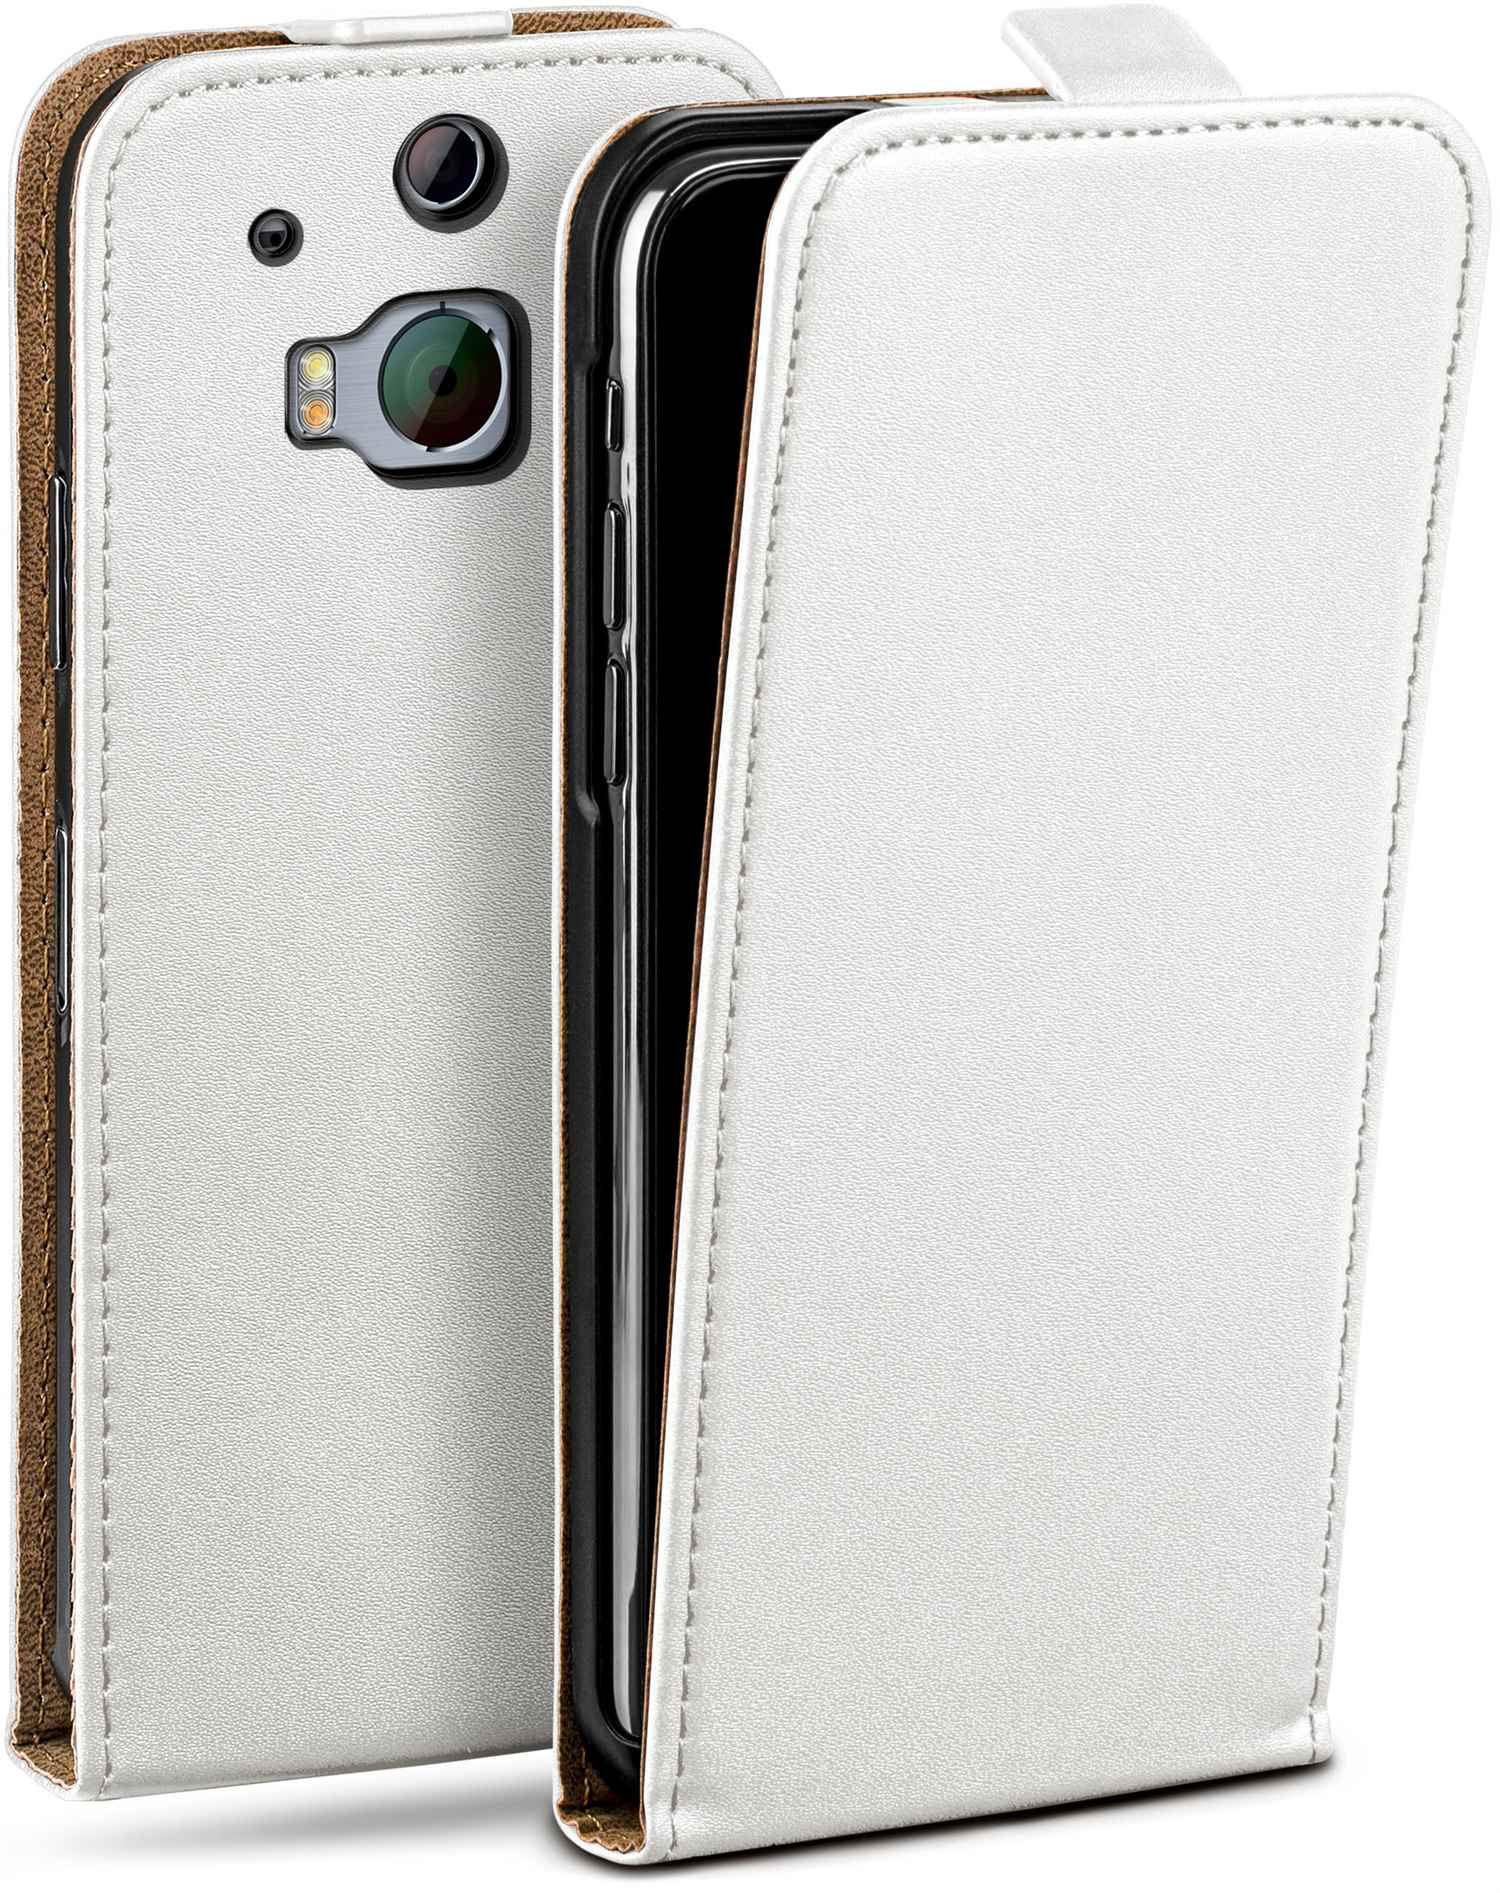 Cover, One MOEX M8, Case, Flip HTC, Pearl-White Flip